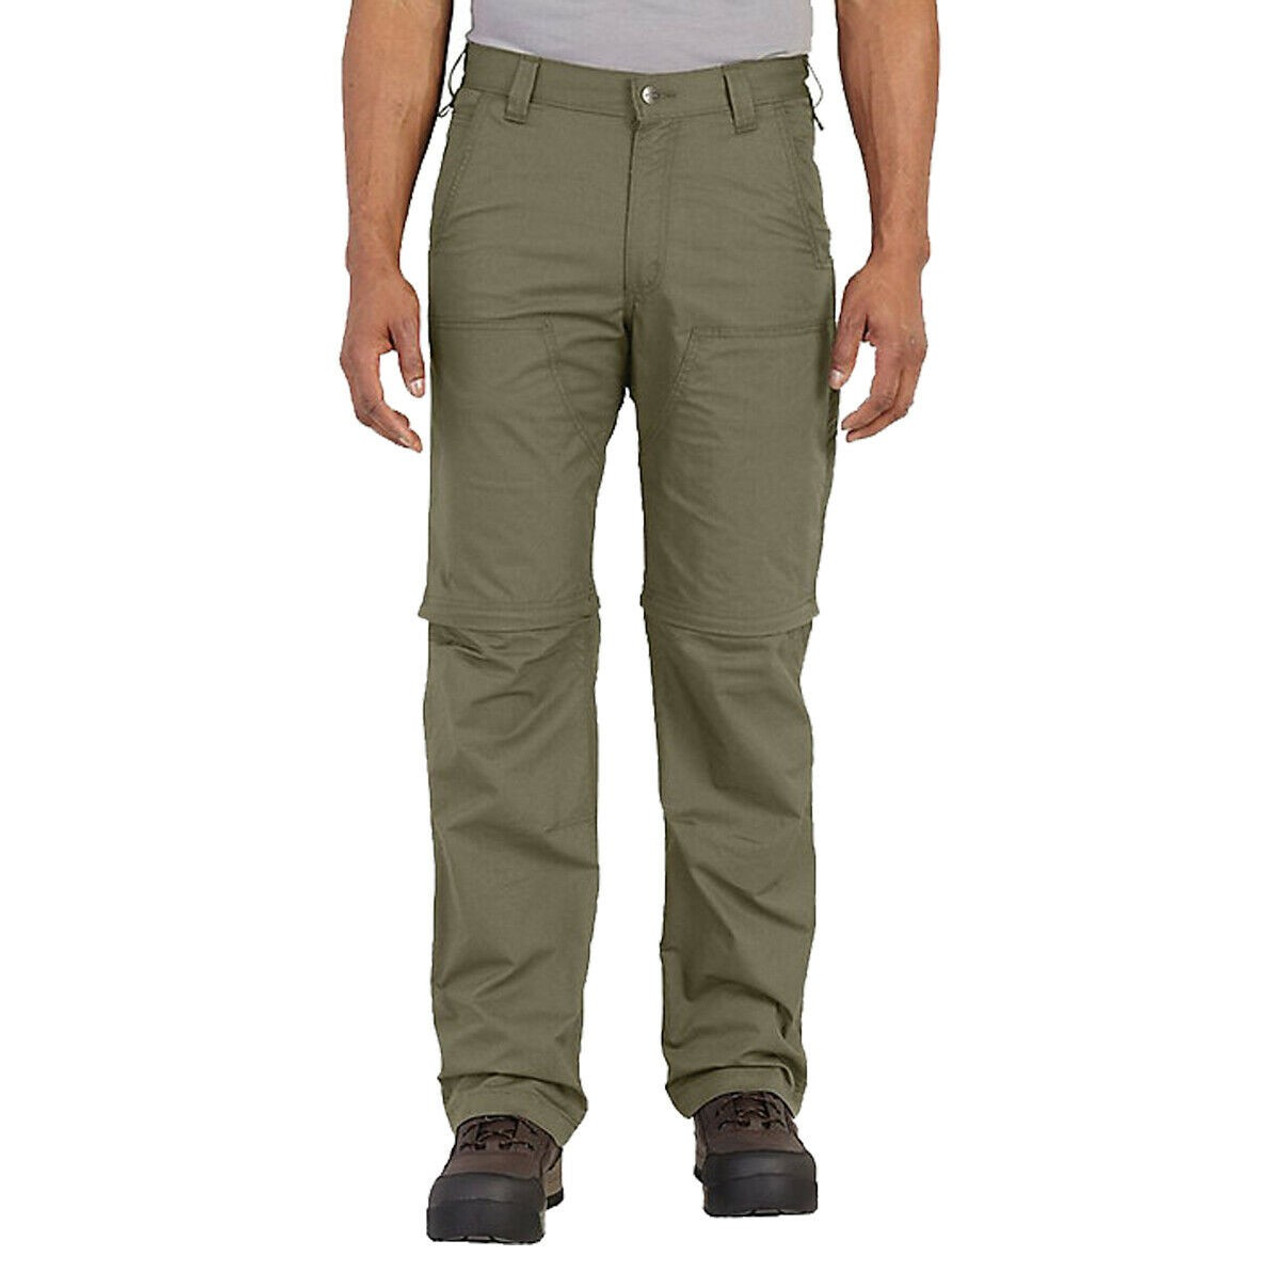 MIER Men Quick Dry Hiking Pants Convertible Cargo Pants